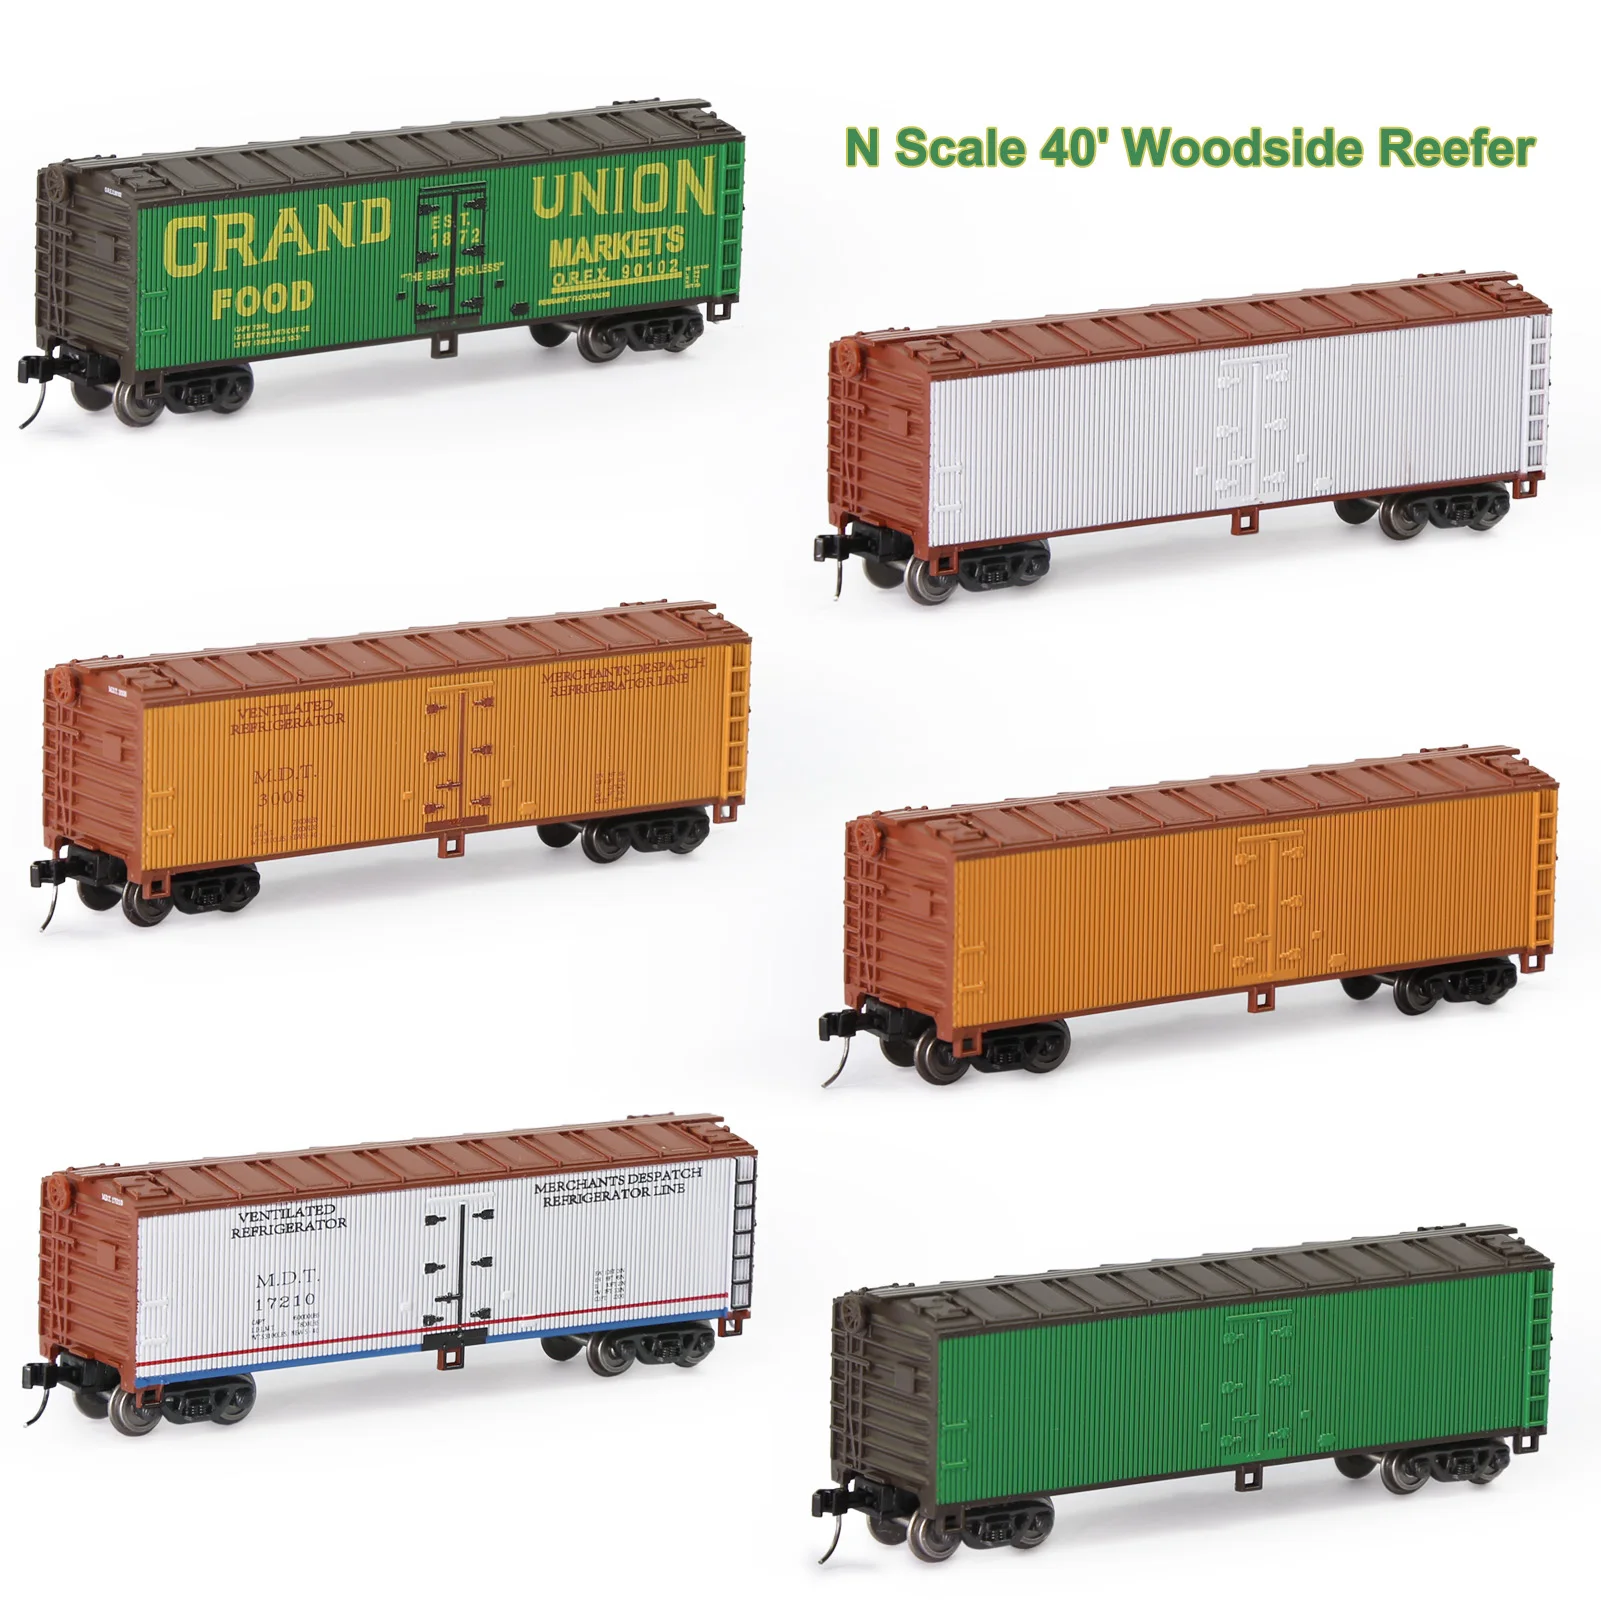 

Evemodel Model Railway N Scale 1:160 40' Woodside Reefer 40ft Boxcar Rolling Stock Freight Car C15016